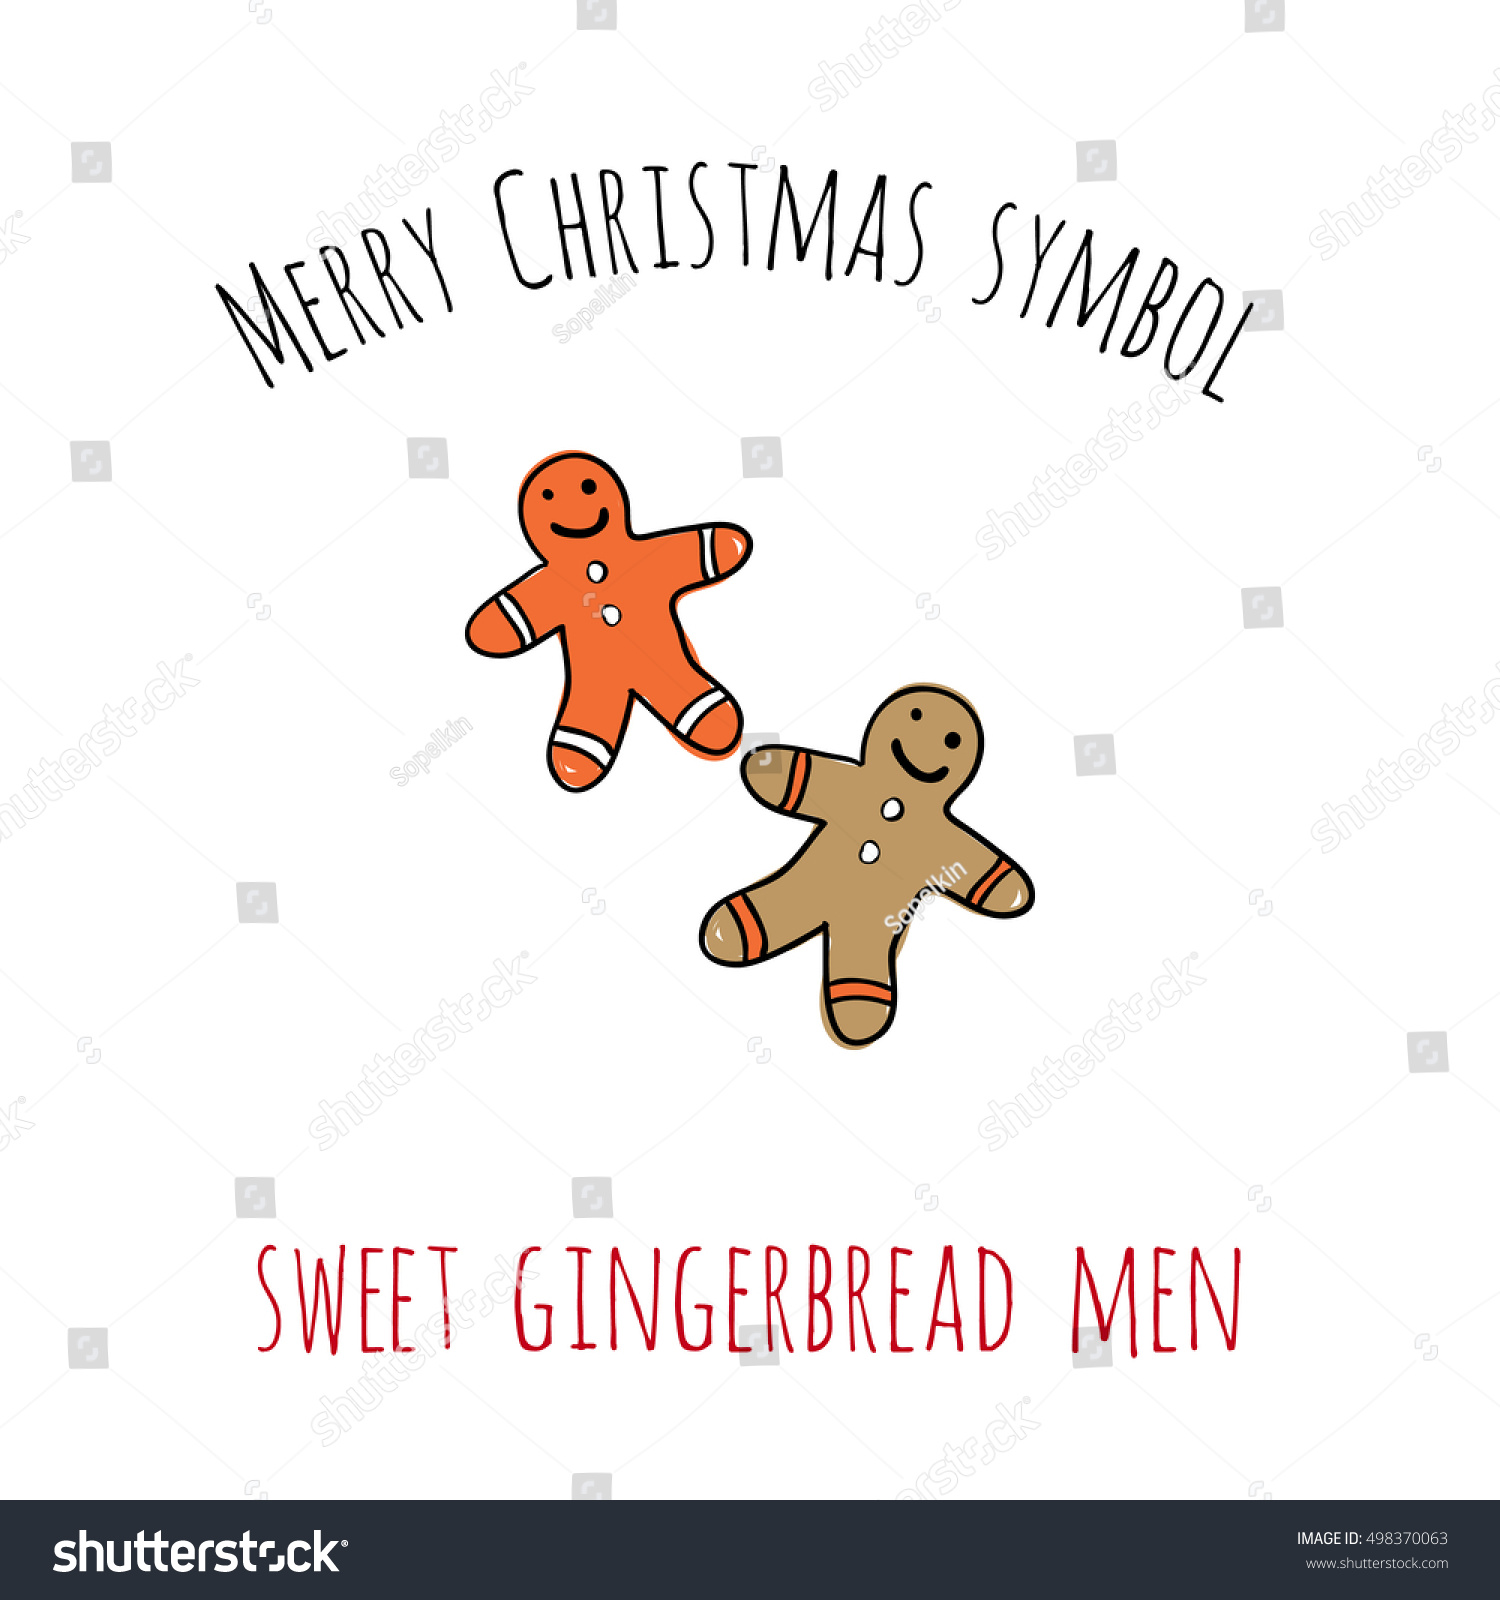 Merry Christmas symbol sweet gingerbread men Beautiful vector for decoration xmas designs Cute